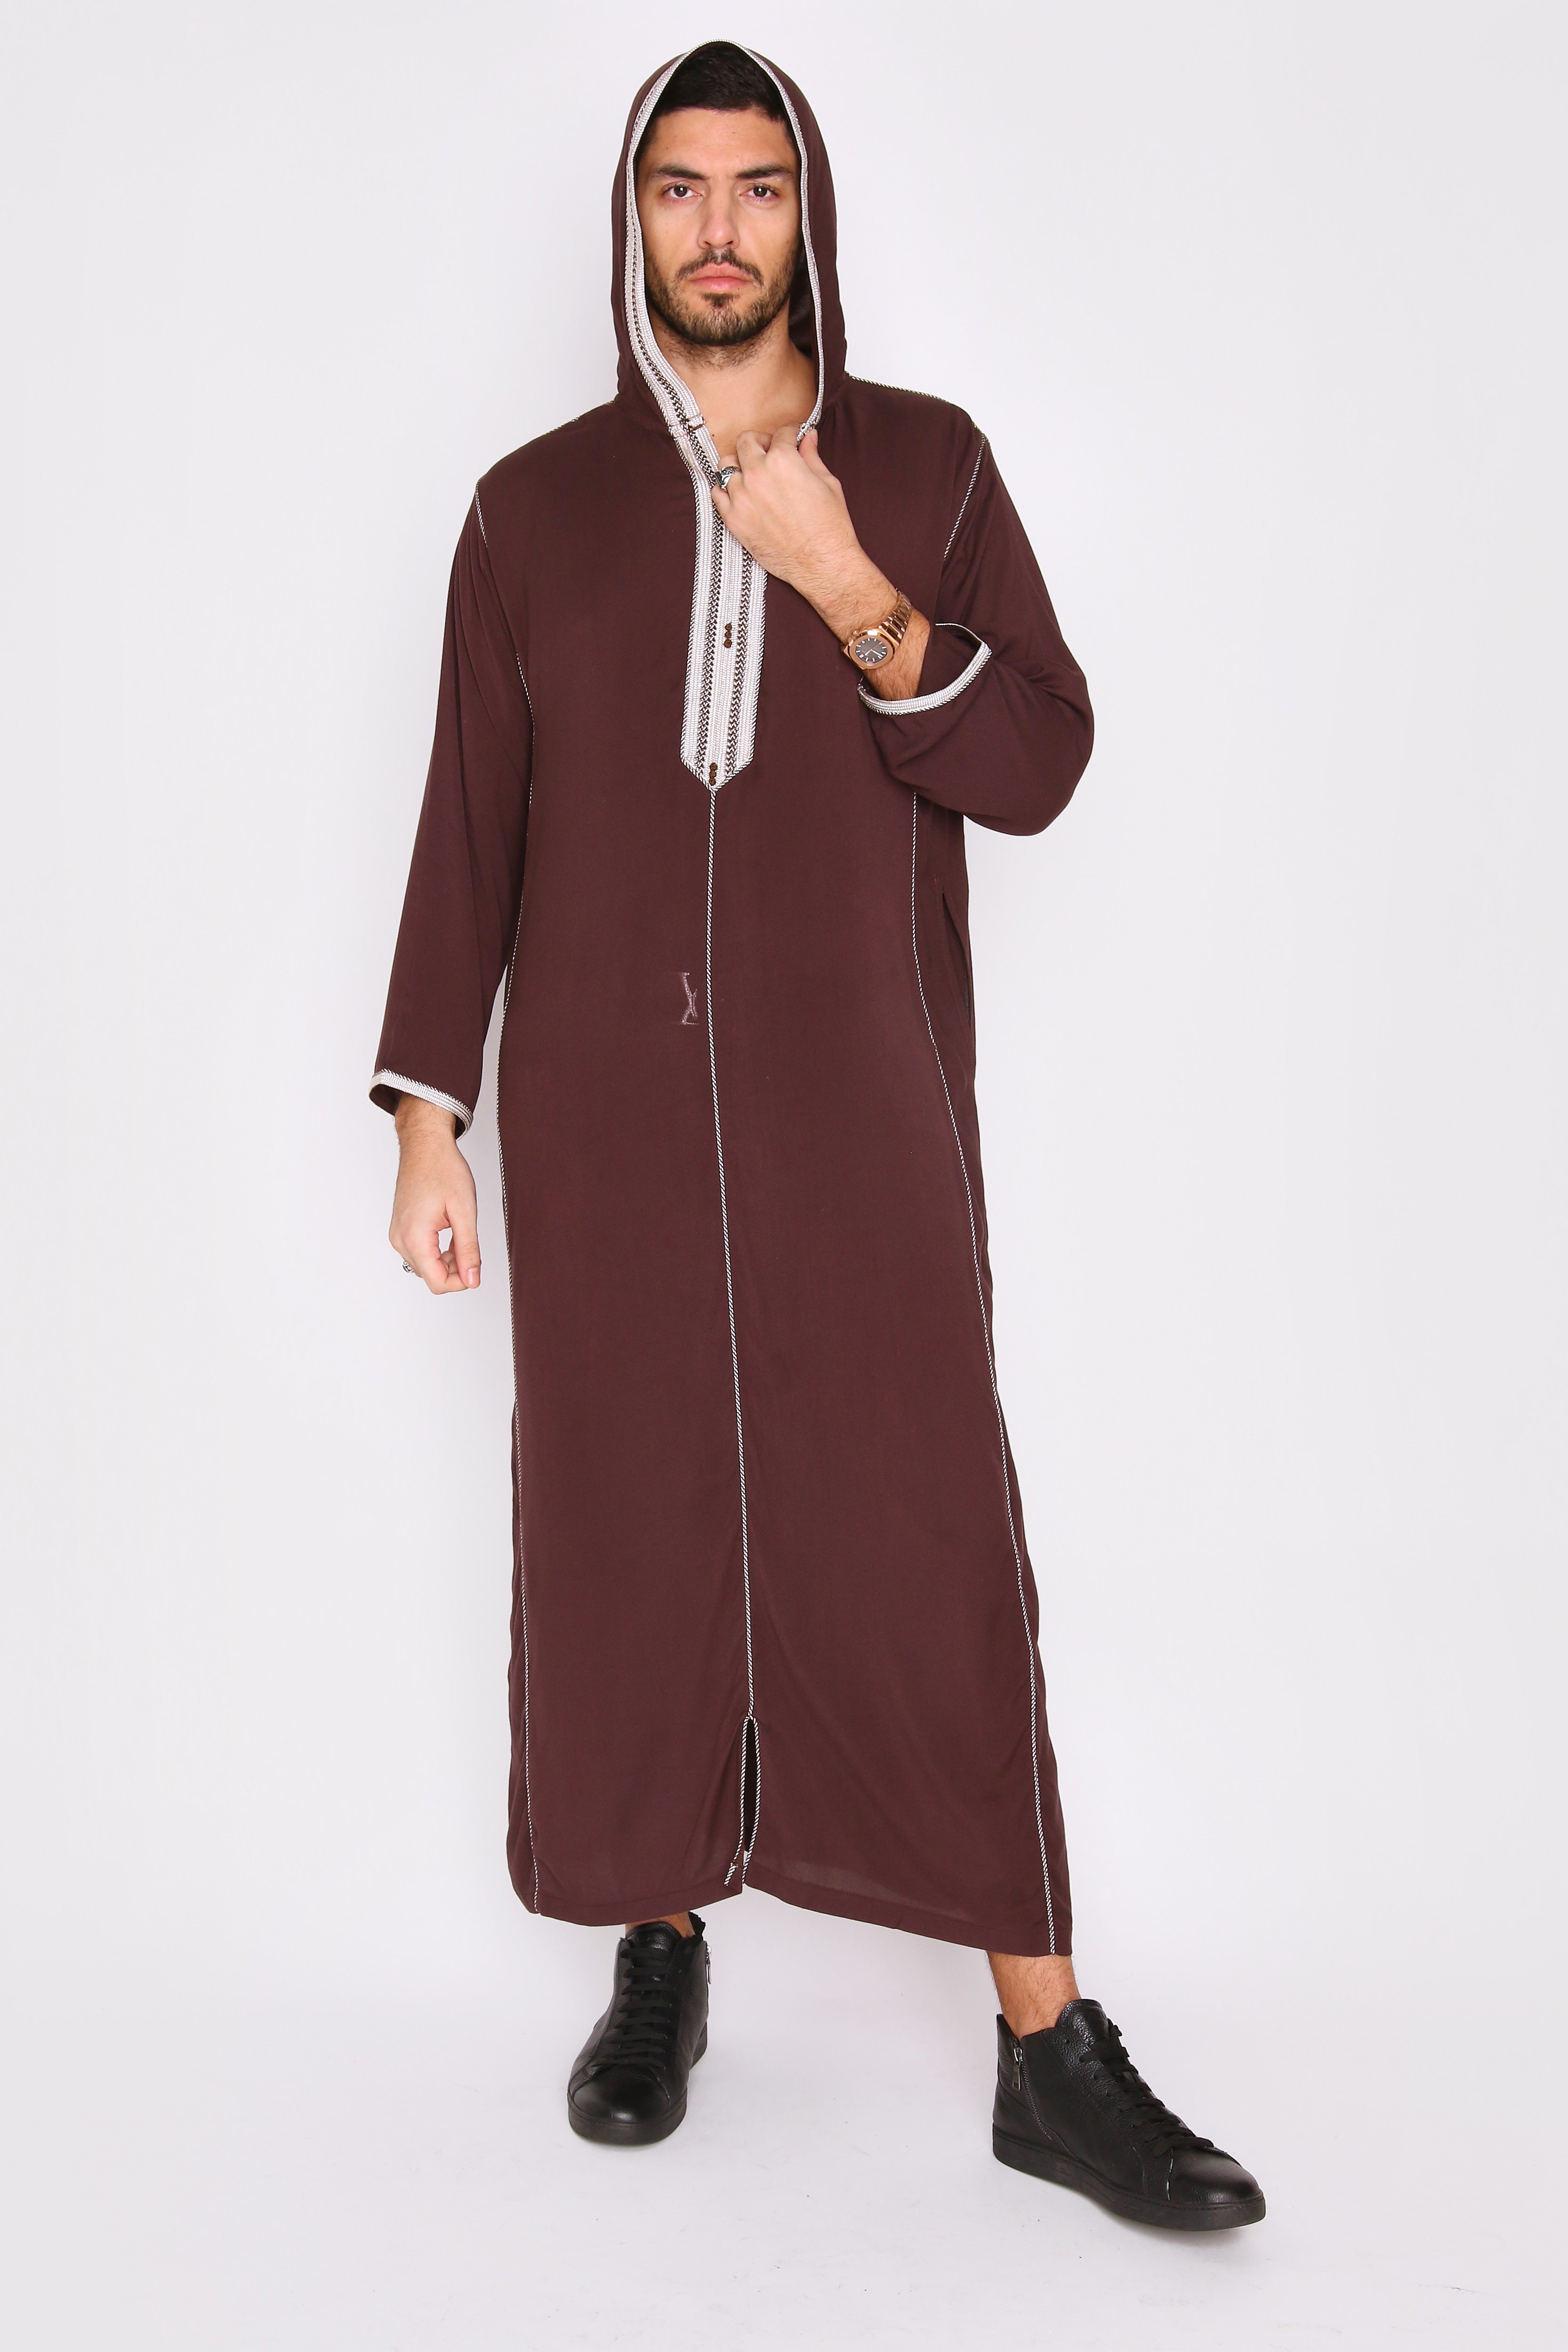 Djellaba Wael Men's Long Sleeve Full-Length Embroidered Hooded Robe Thobe in Brown